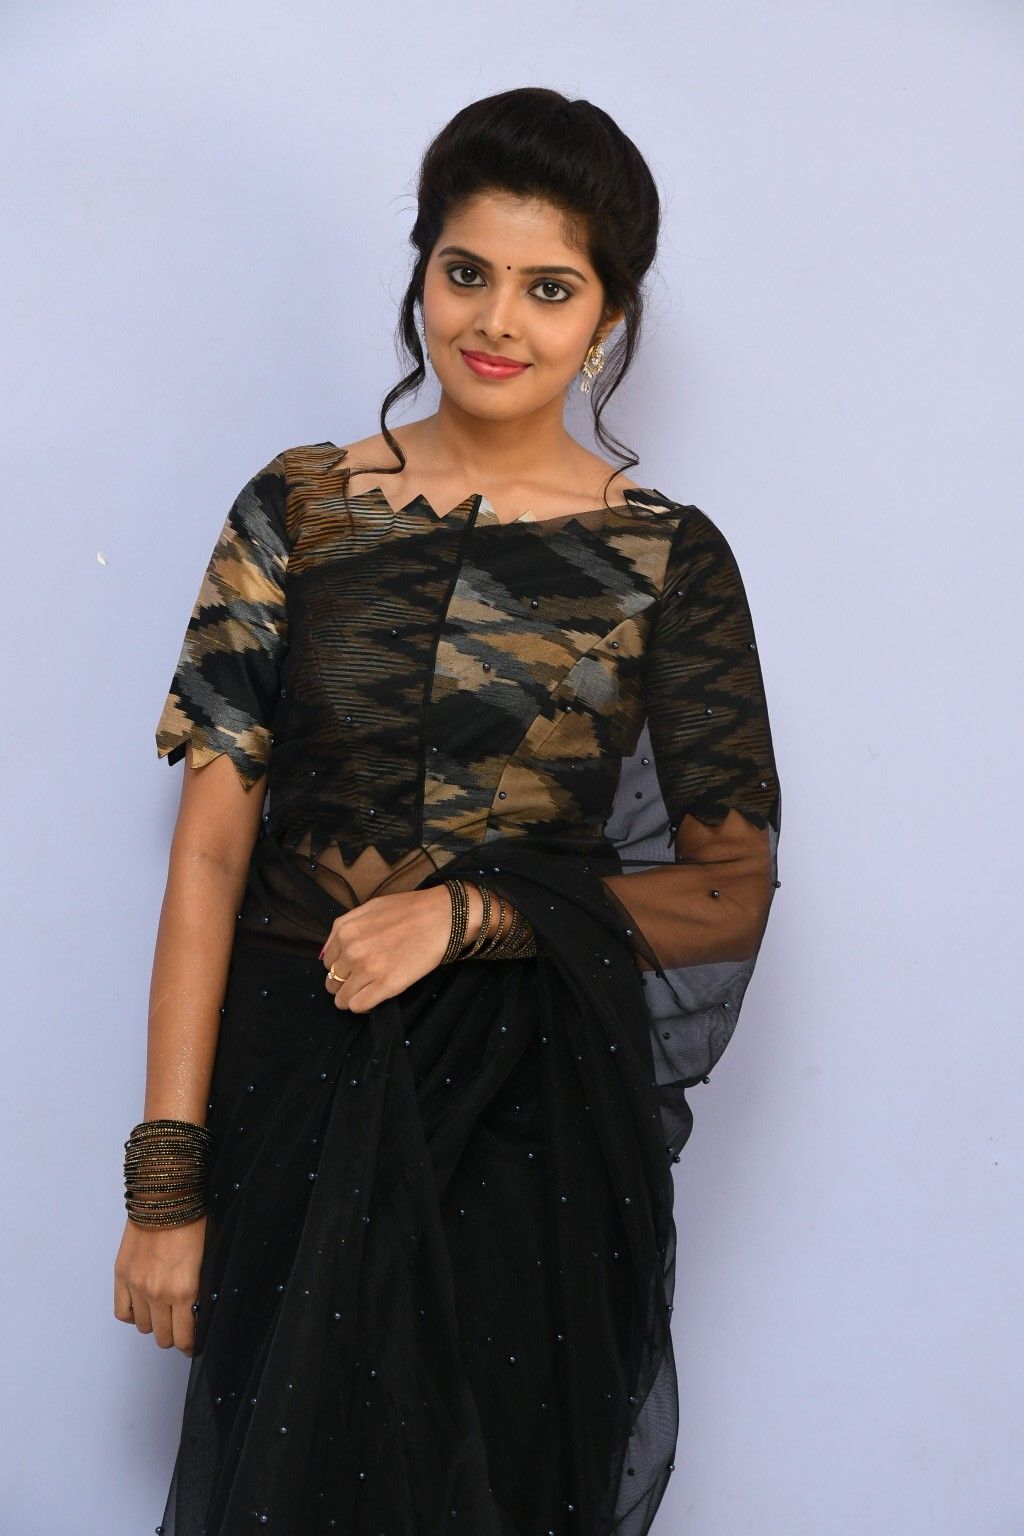 Telugu Galleries. Photo. Event Photo. Telugu Actress. Telugu Actres. Telugu Actress Wallpaper